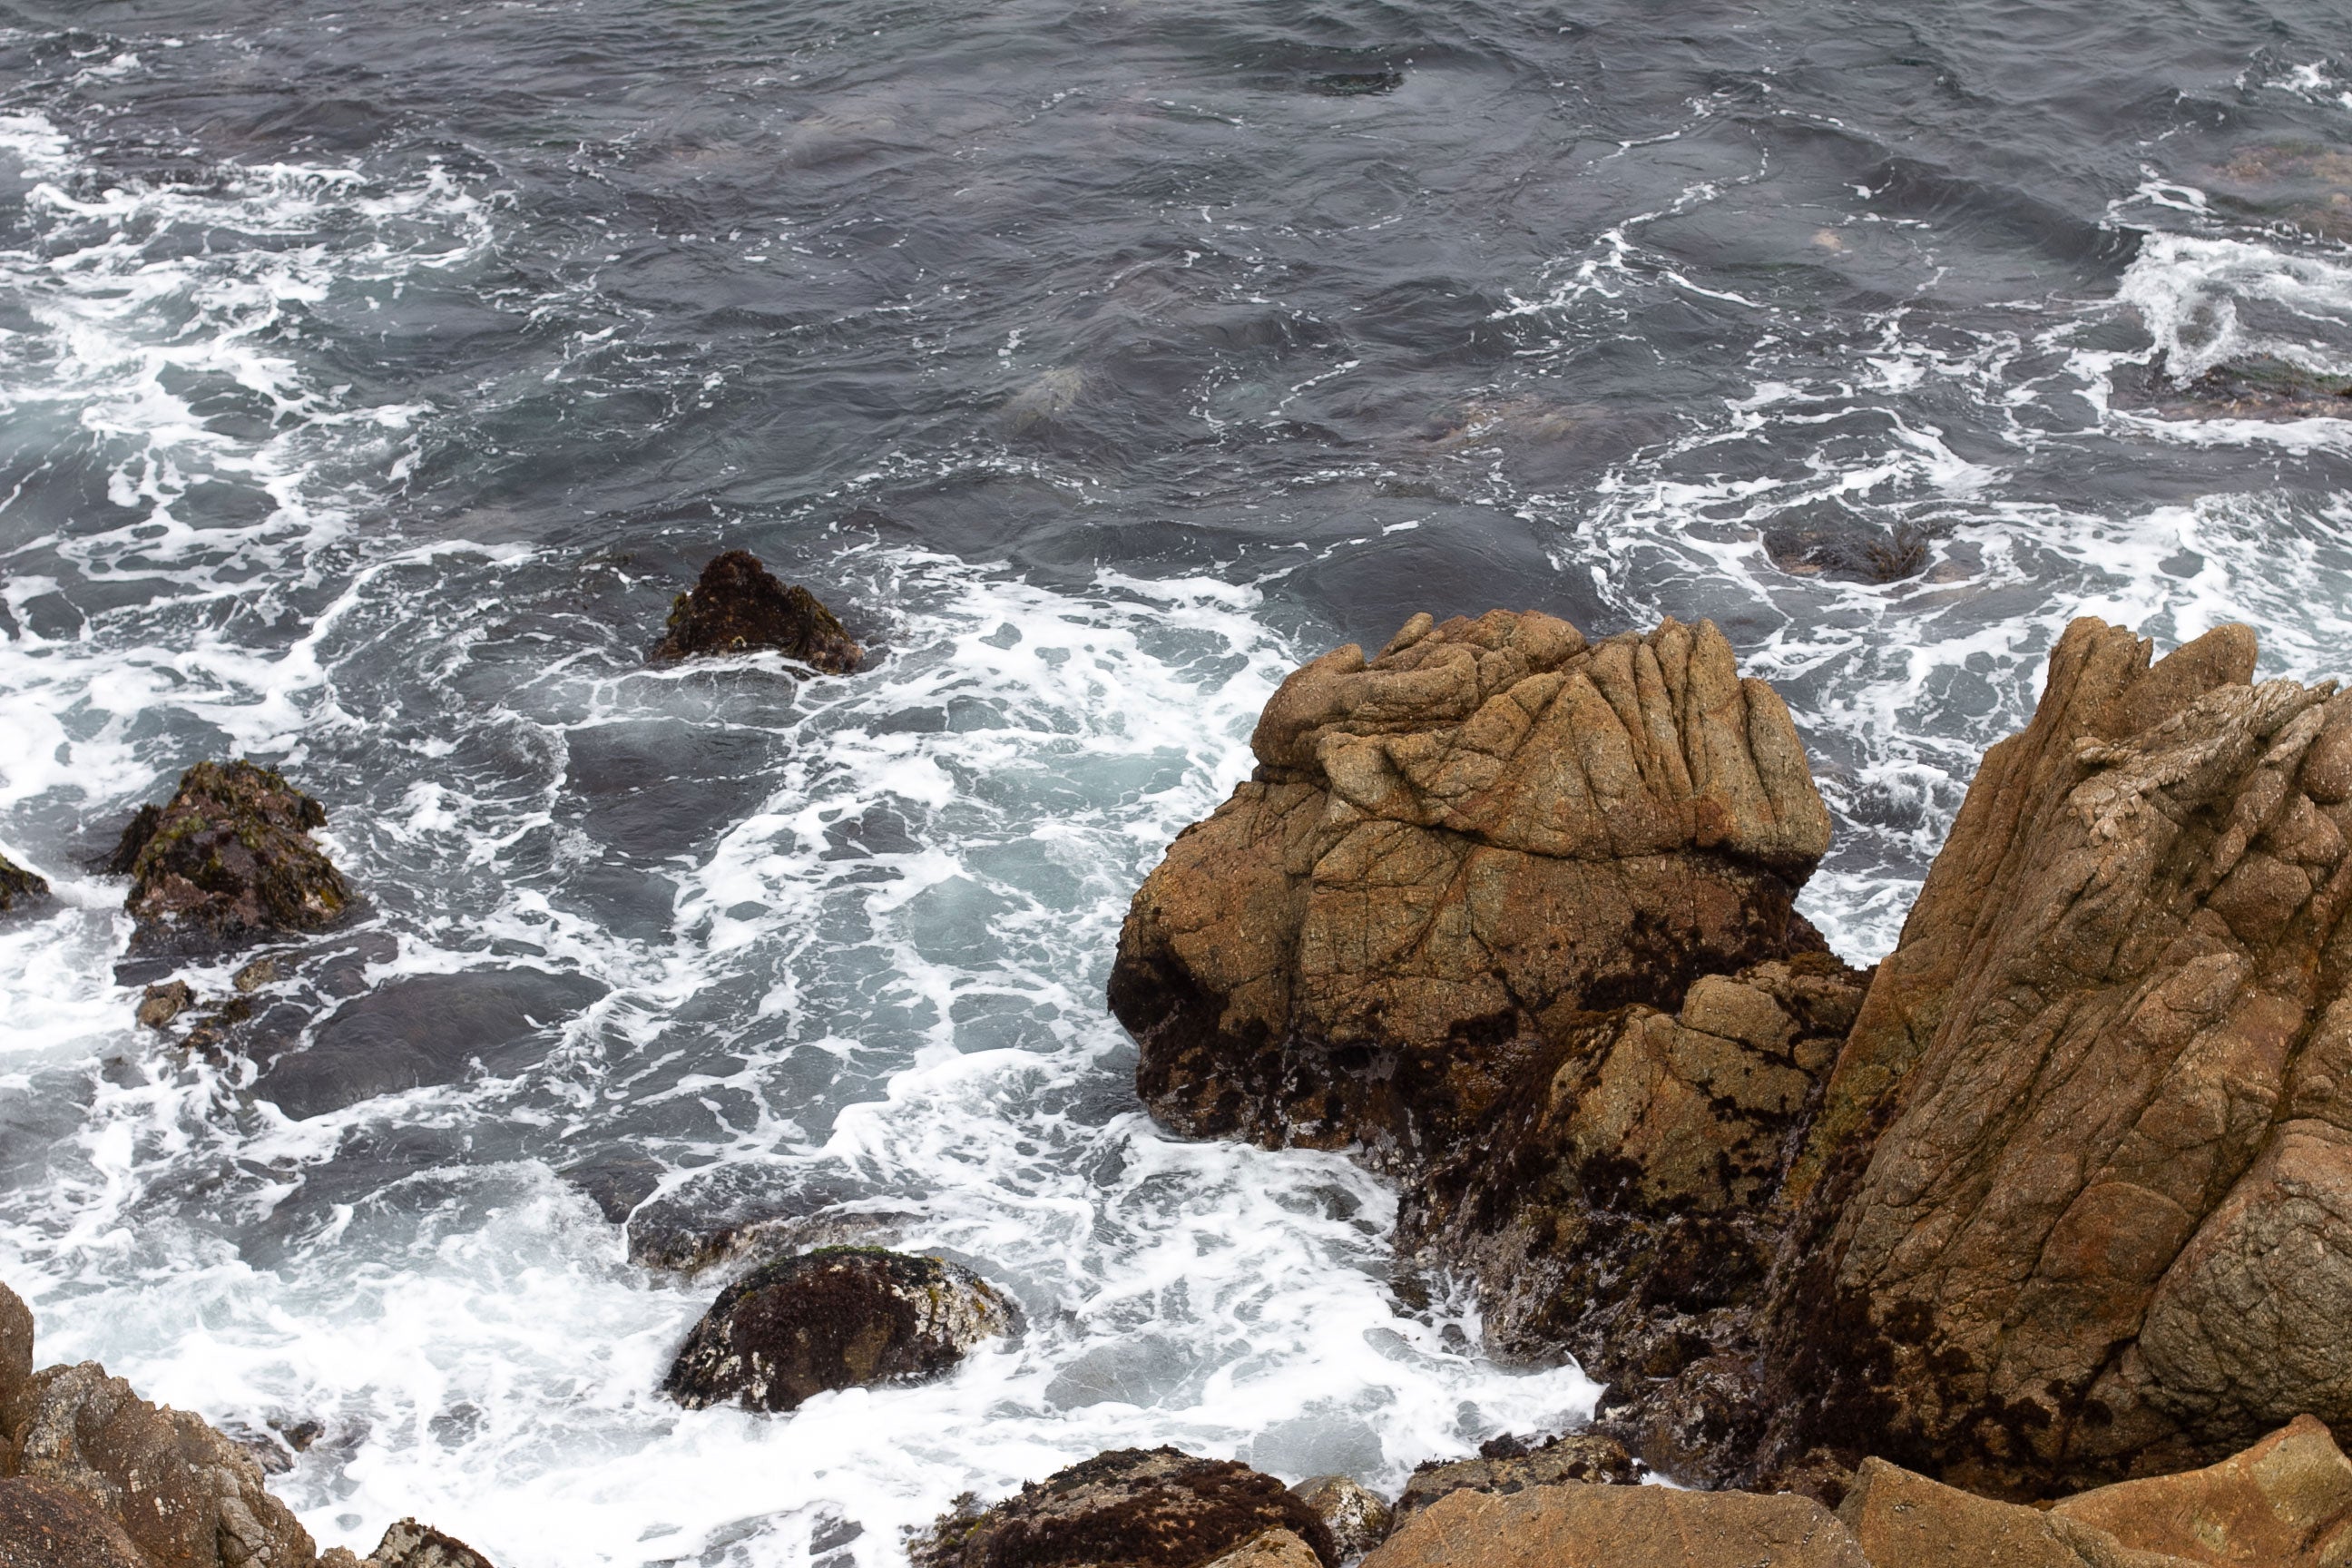 Rebecca Haas Jewelry - California Inspiration: Waves Hitting Rocks